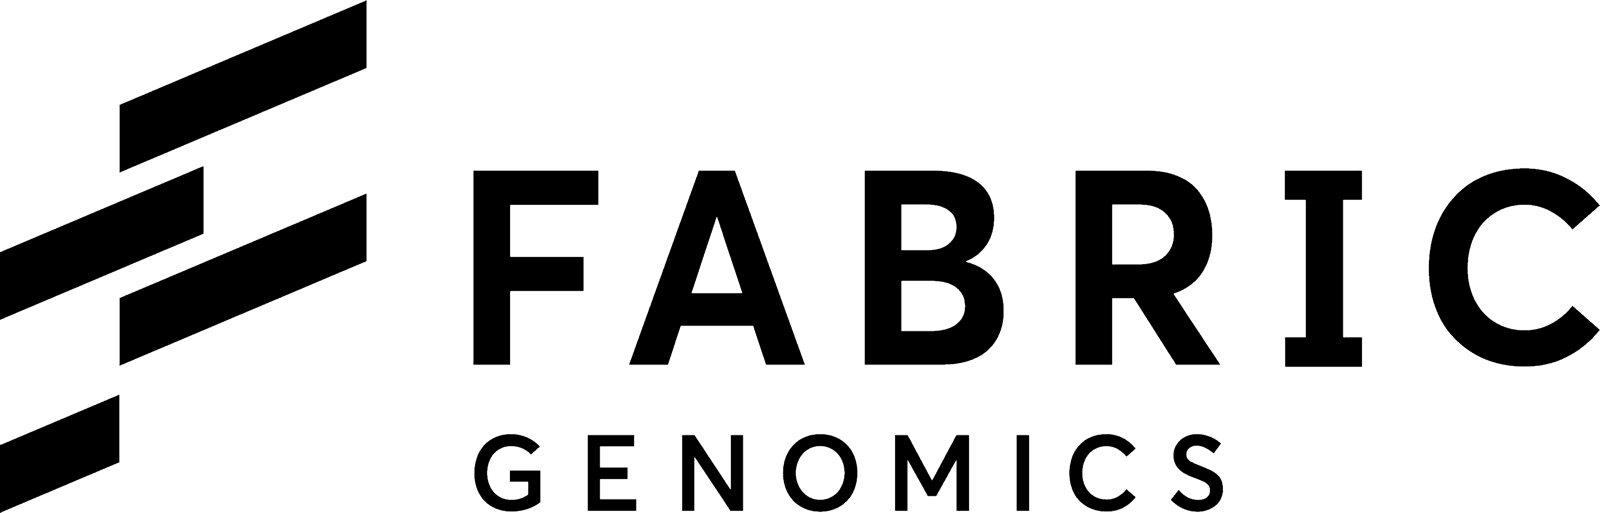 Fabric Genomics-logo-29